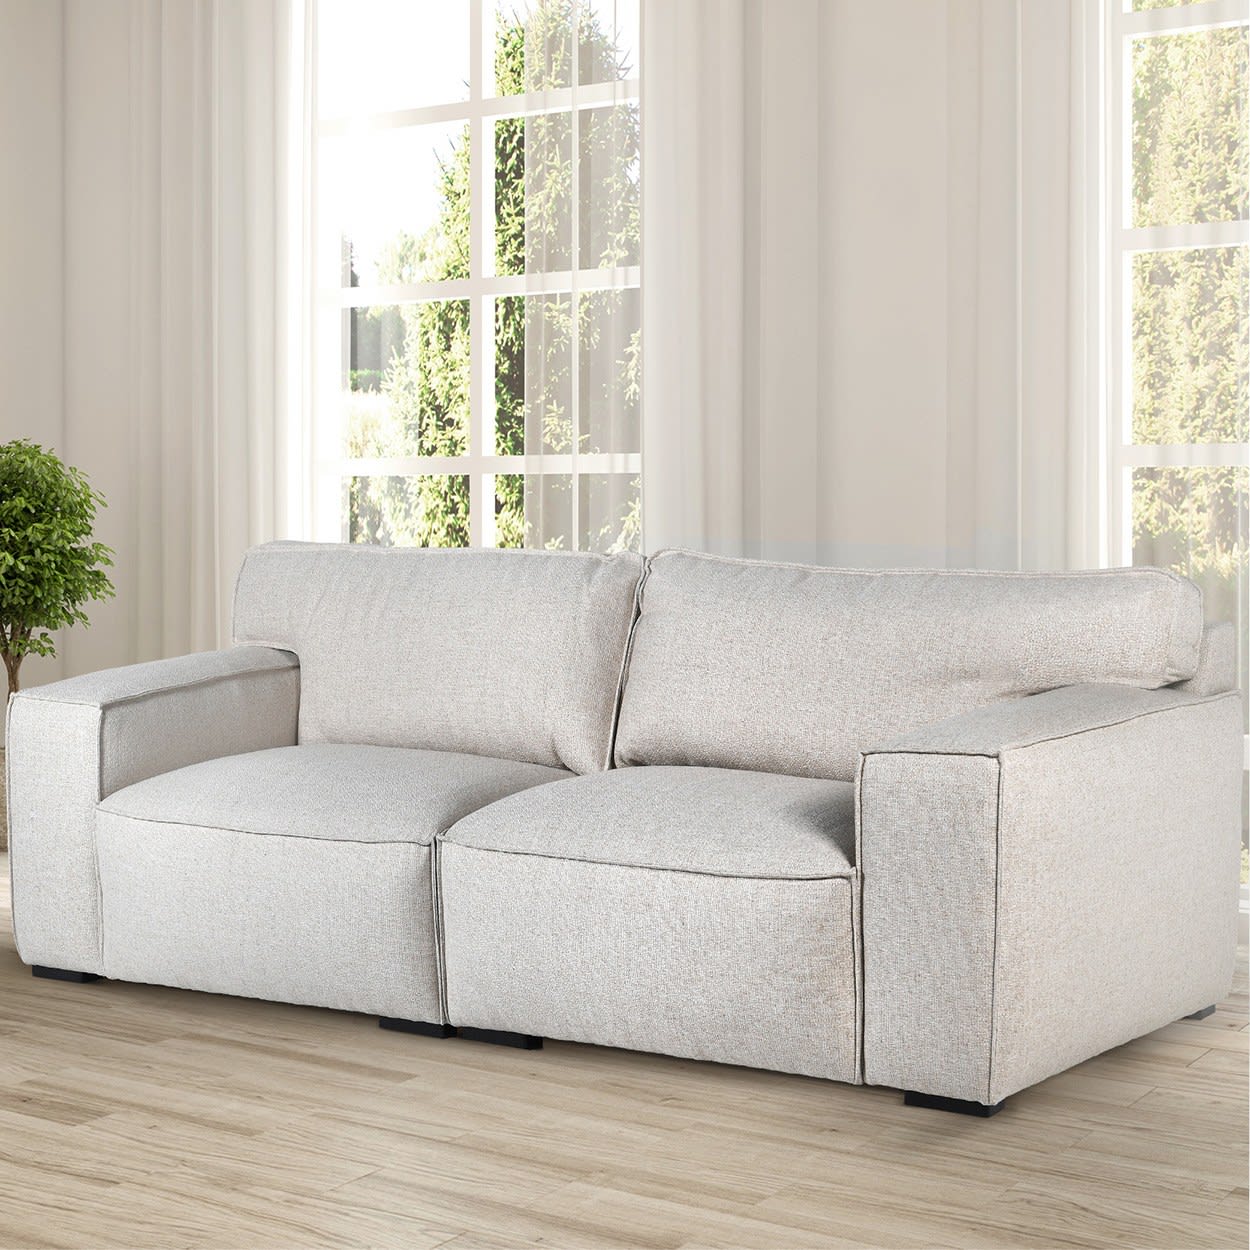 Oat Natural Linen Blend 3 Seater Sofa